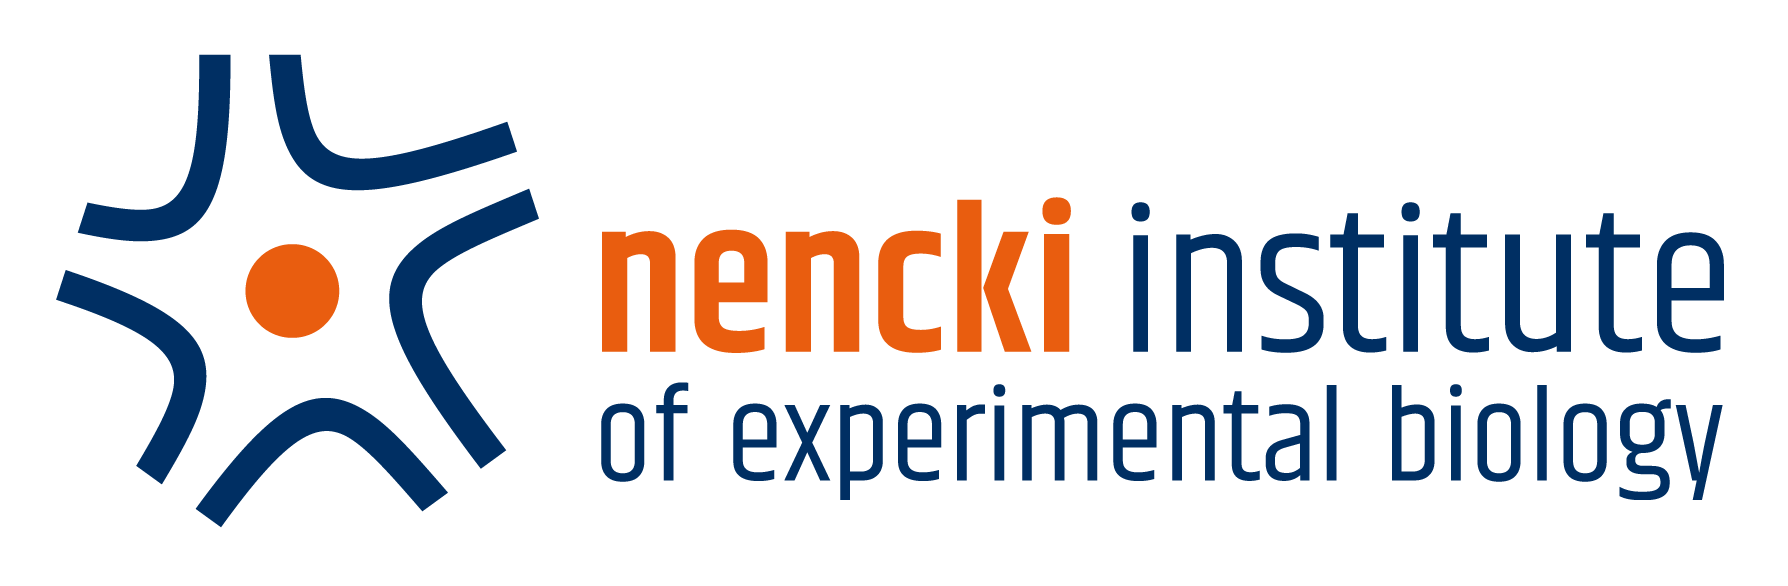 Nencki Institute's logo